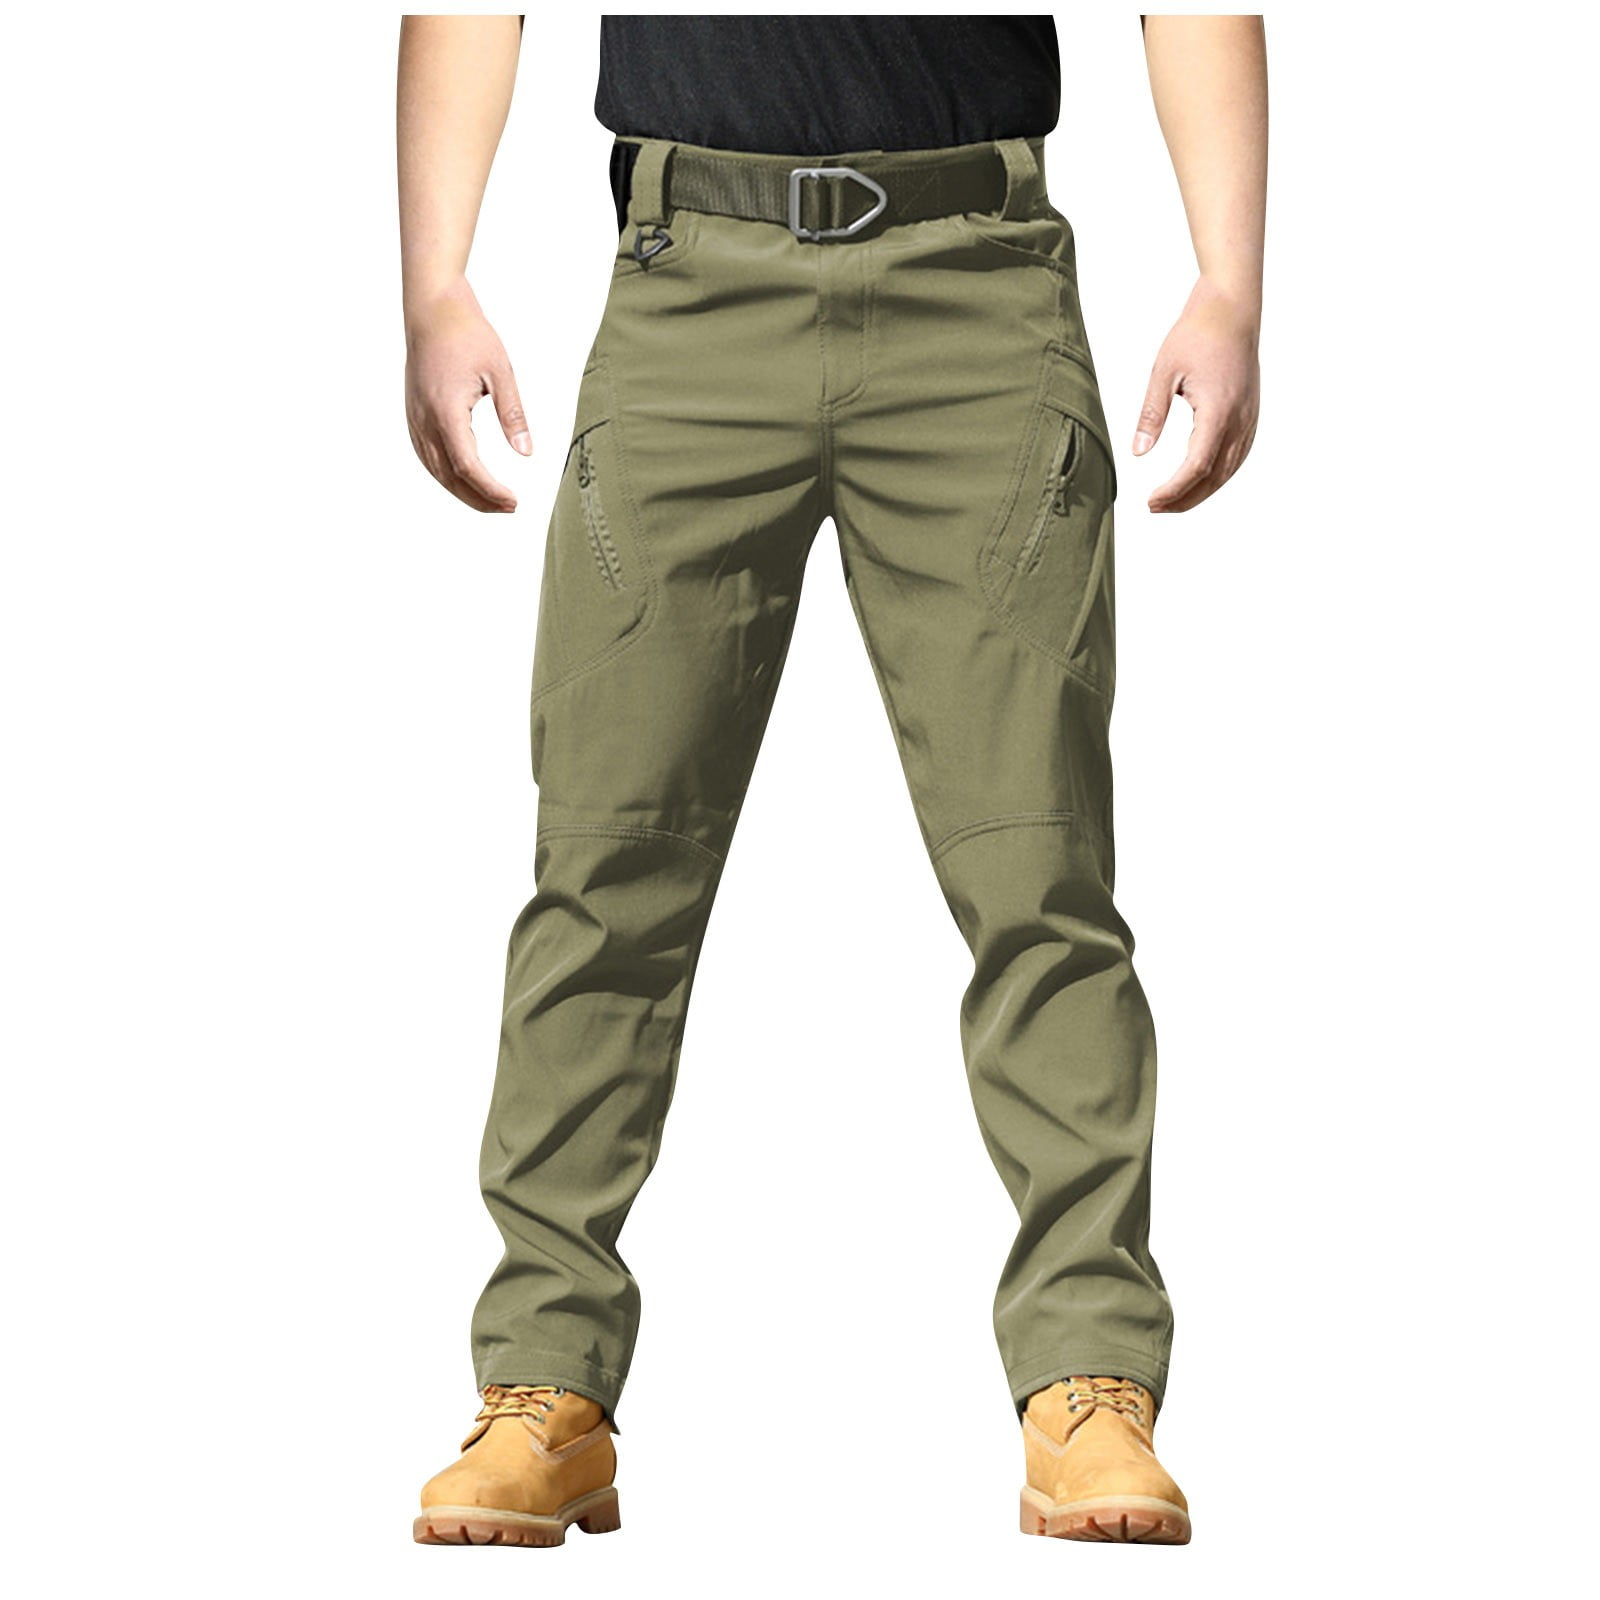 Kagetolytai Cargo Pants for Men Pants Elastic Fabric Ix9 Special ...